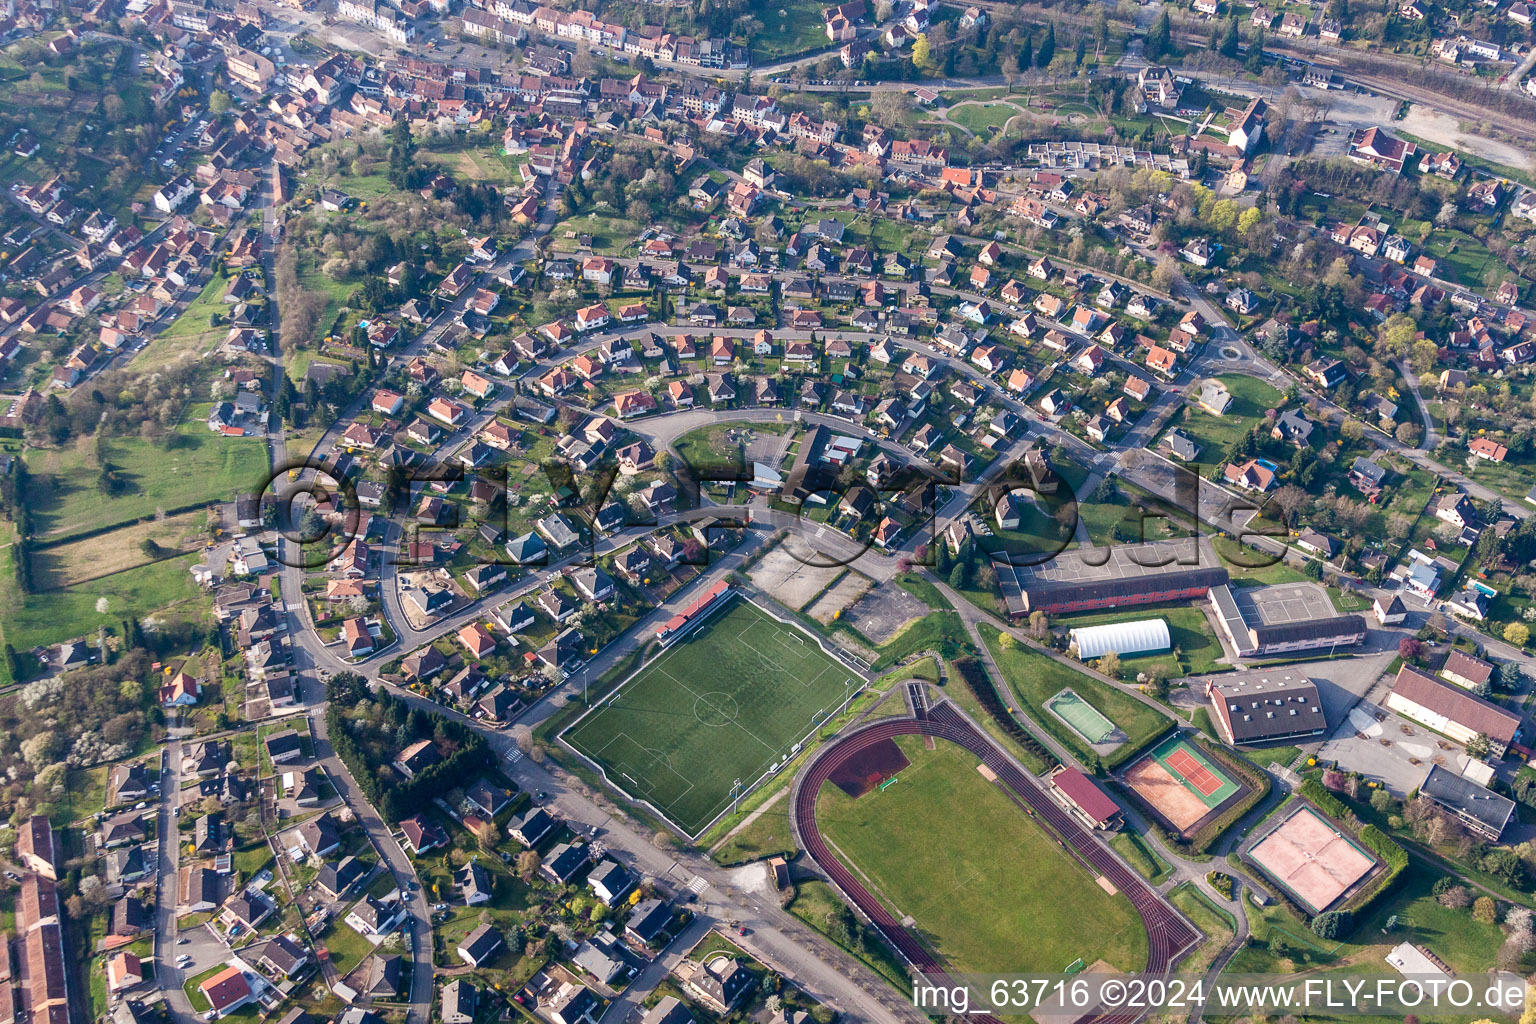 Ensemble of sports grounds terrain de football synthA?tique in Niederbronn-les-Bains in Grand Est, France